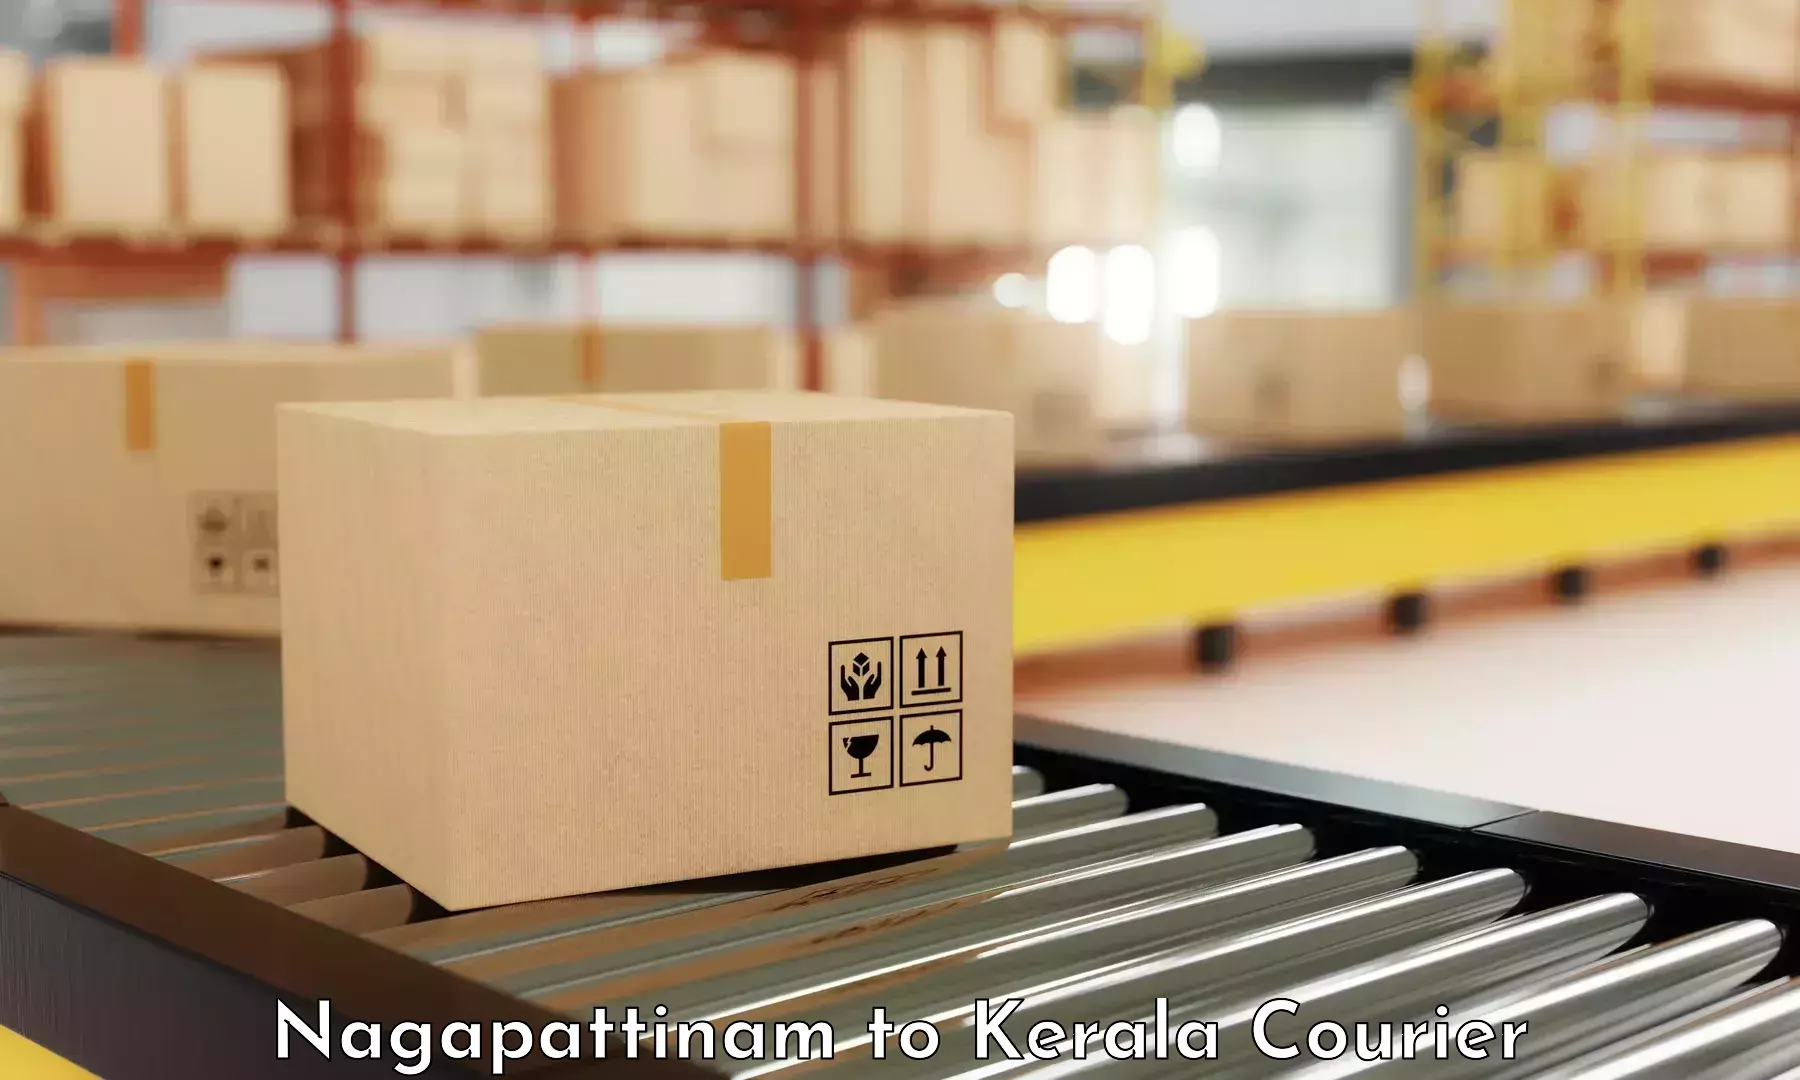 Smart shipping technology Nagapattinam to Kochi